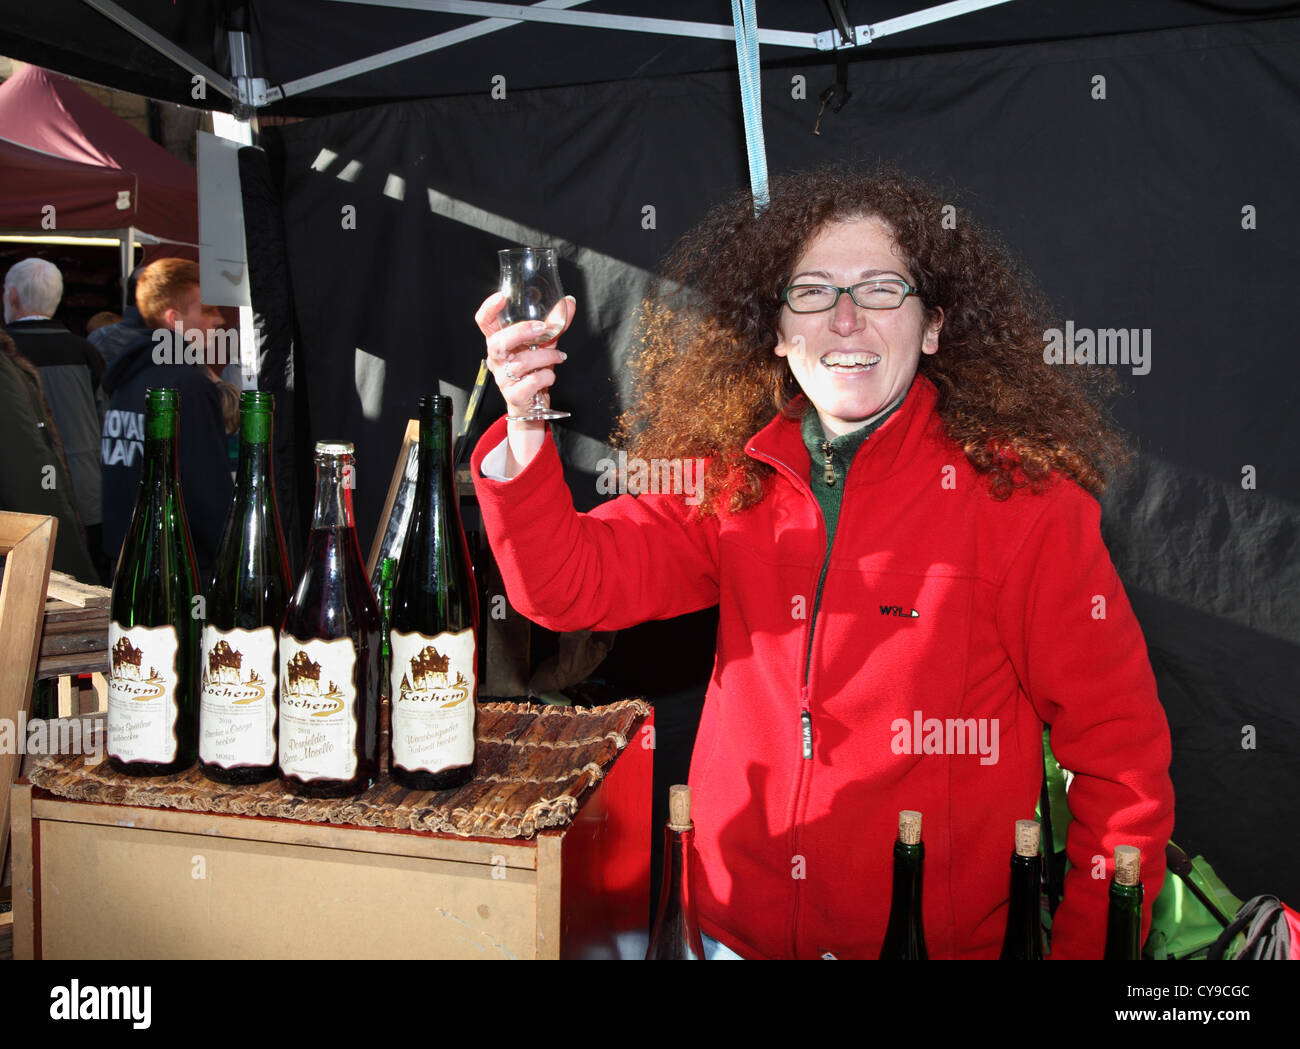 Frau mit Wein Glas Durham City Food Festival, North East England, Großbritannien Stockfoto